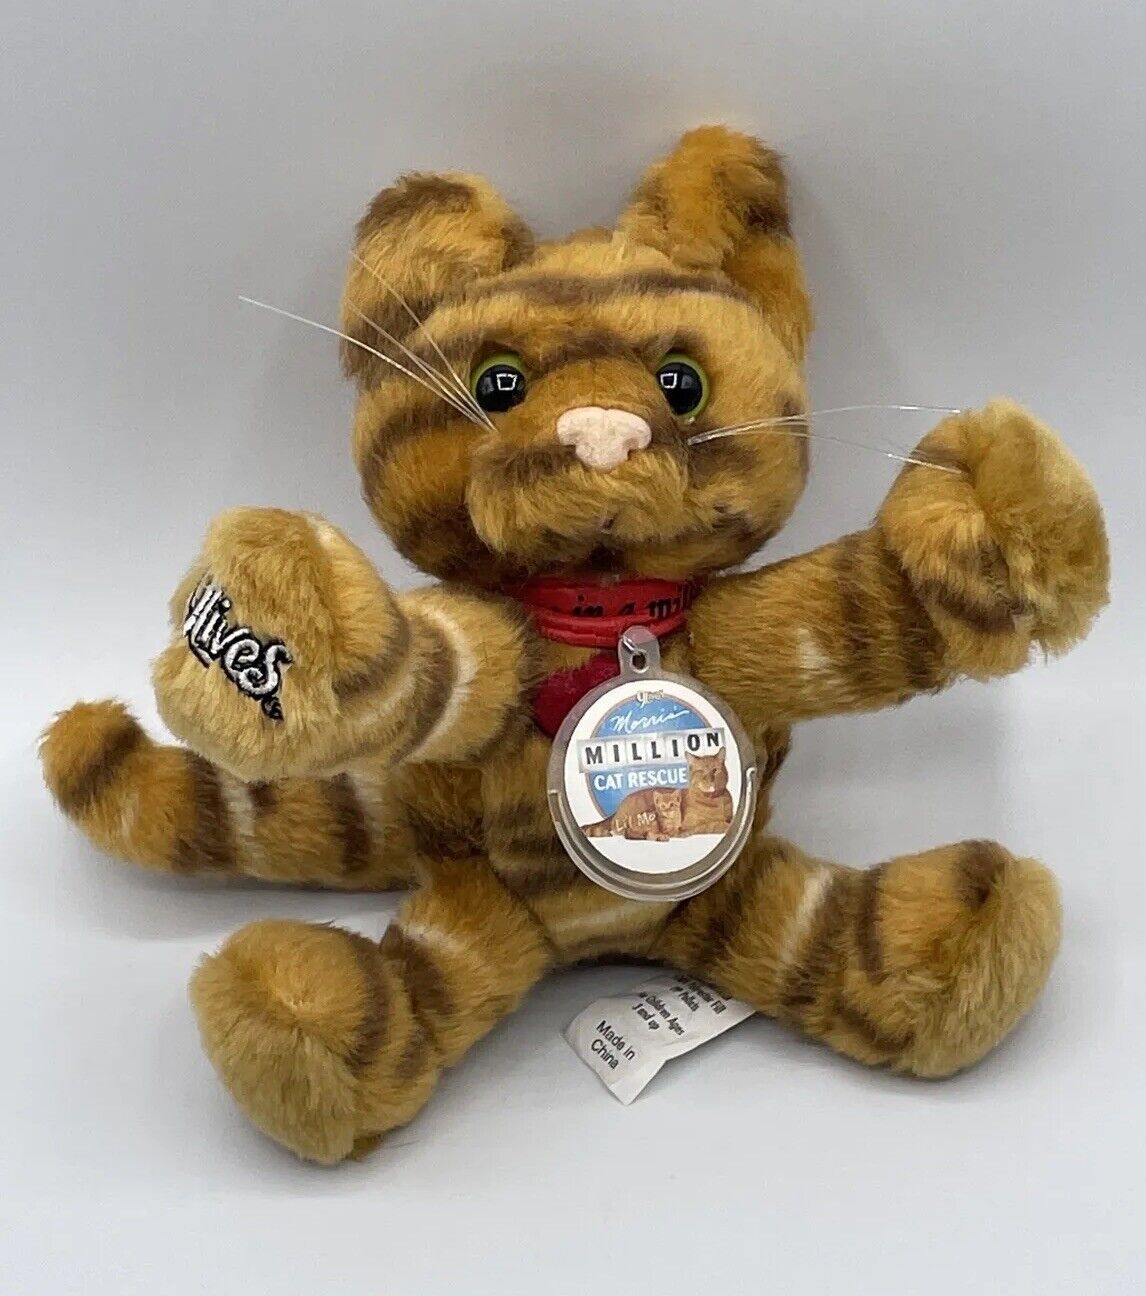 9Lives Mr Morris Kitty Cat Plush Advertising Orange Tabby Stuffed Animal 7 inch